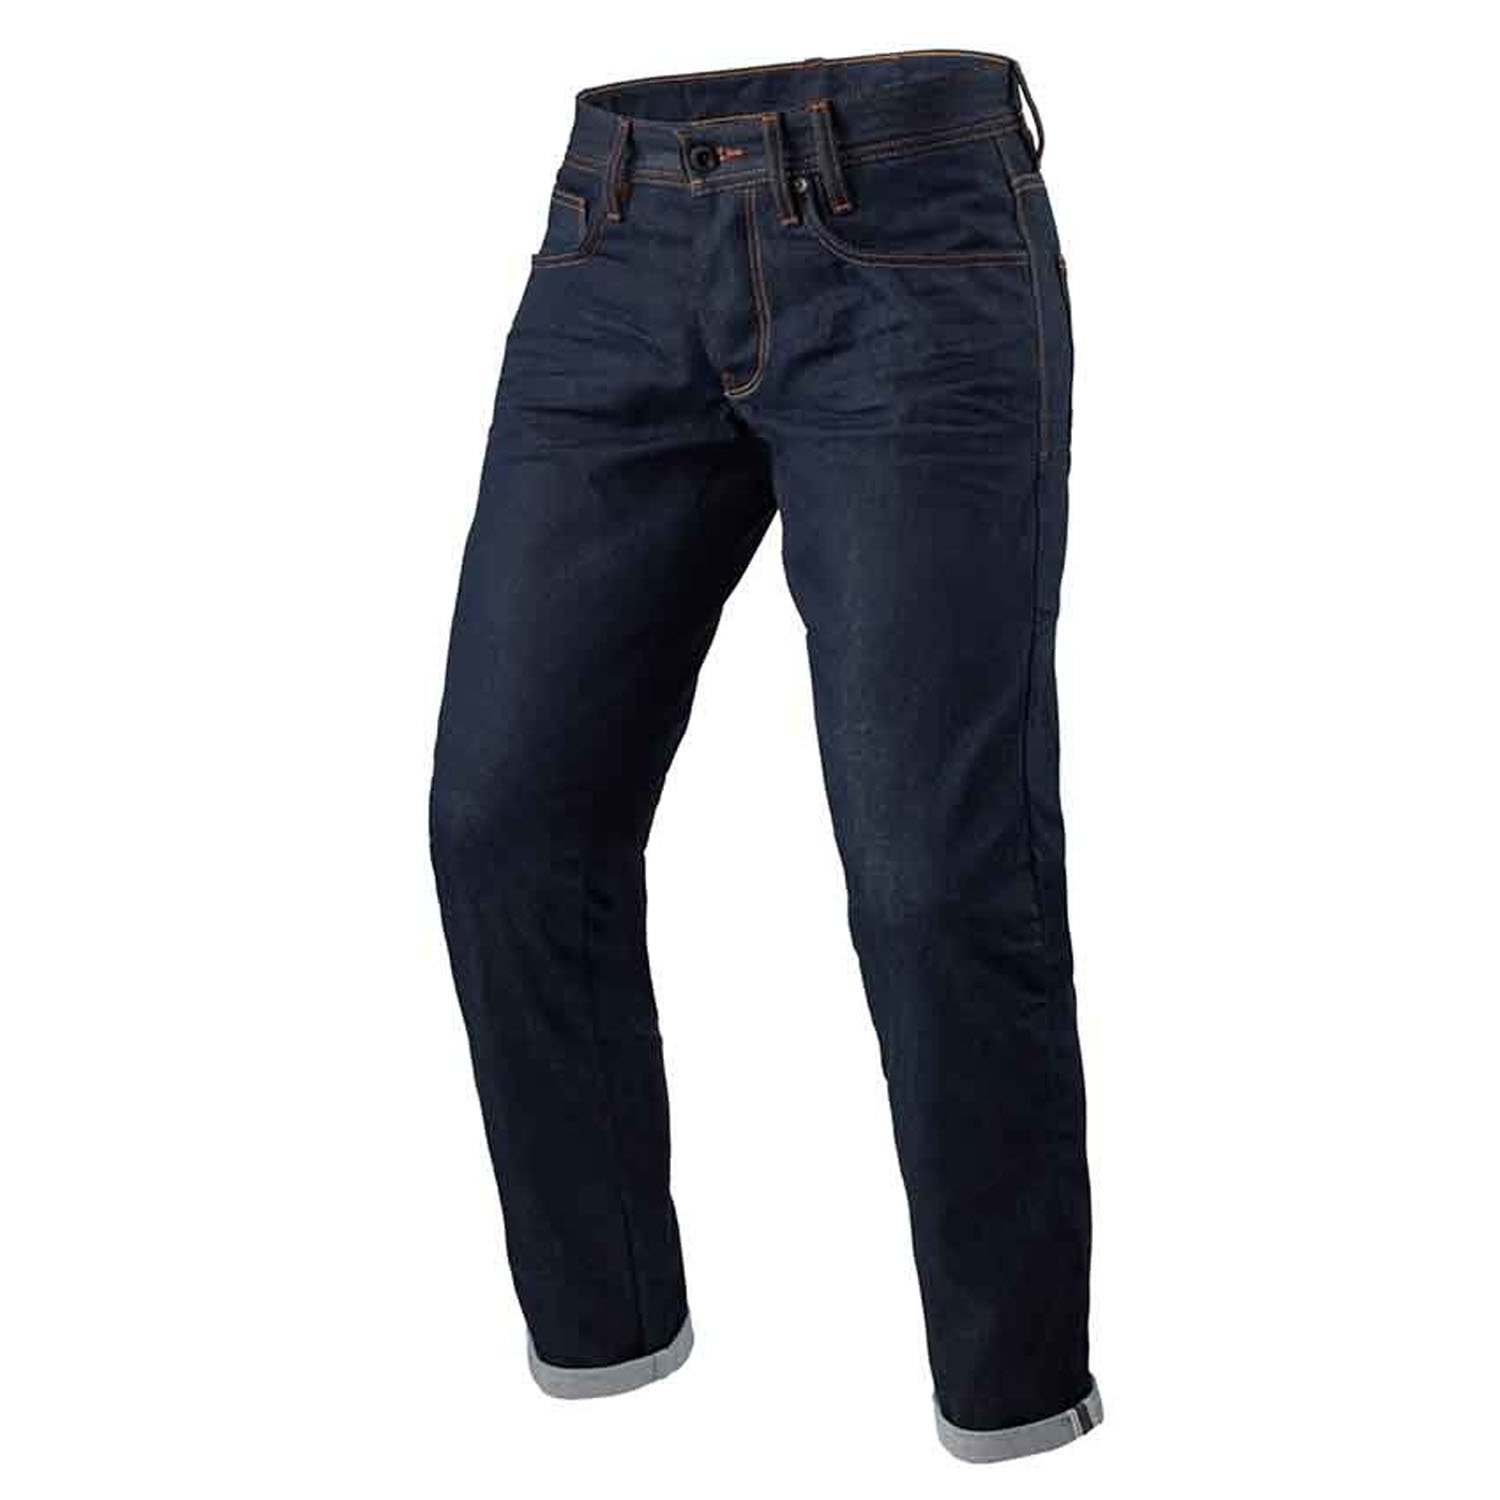 Image of REV'IT! Jeans Lewis Selvedge TF Dark Blue L36 Motorcycle Pants Size L36/W30 EN